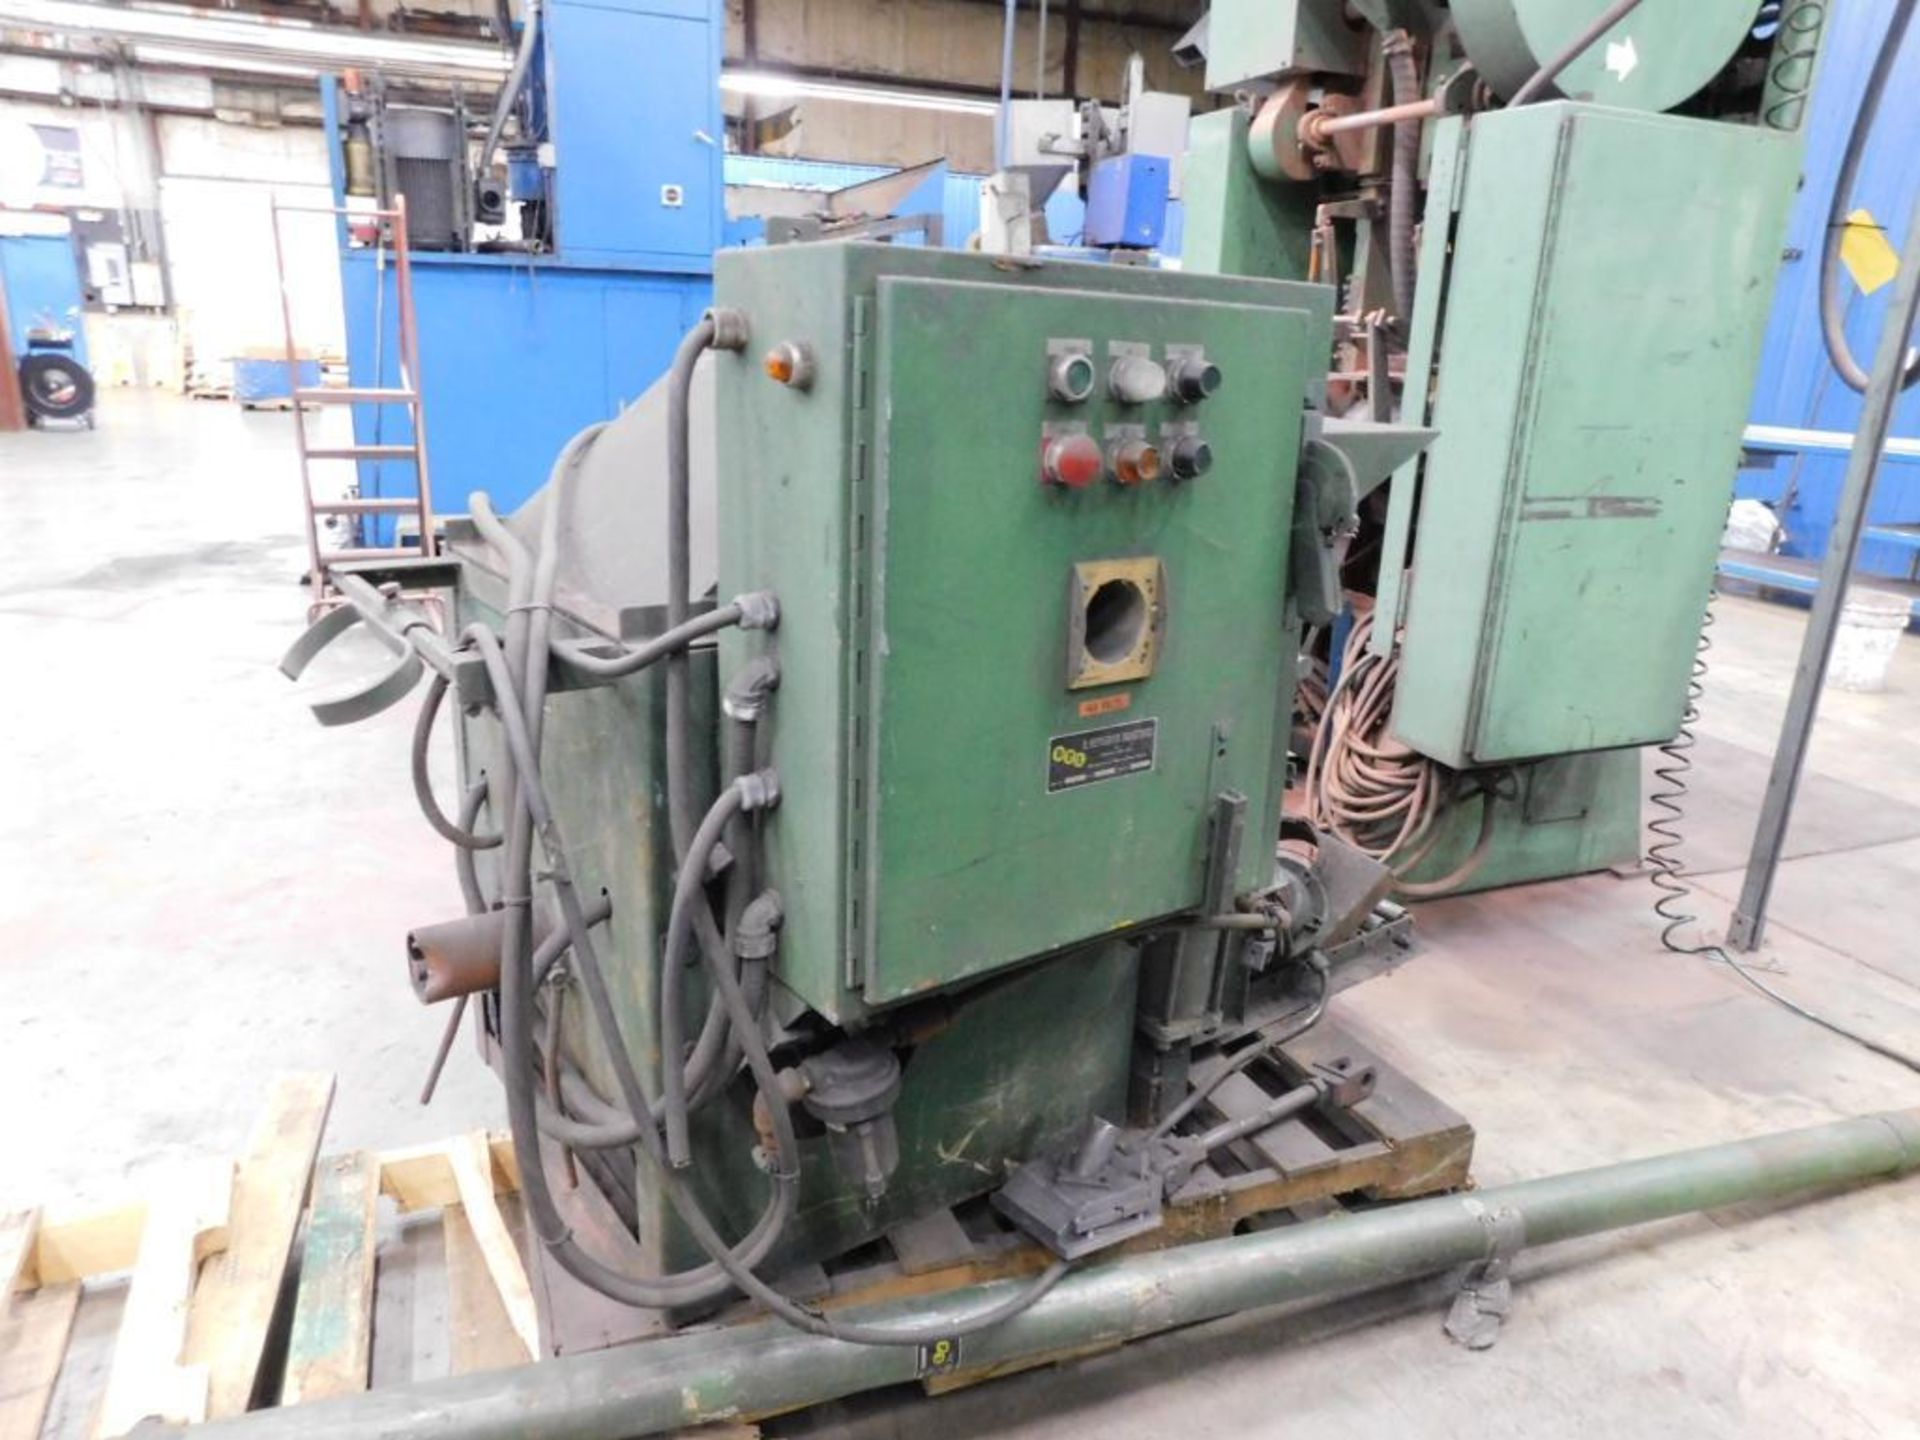 Gasbarre Powder Compacting Press, Mechanical, Model 30 Standard, S/N: 86256, 30 Ton Maximum Pressing - Image 17 of 22